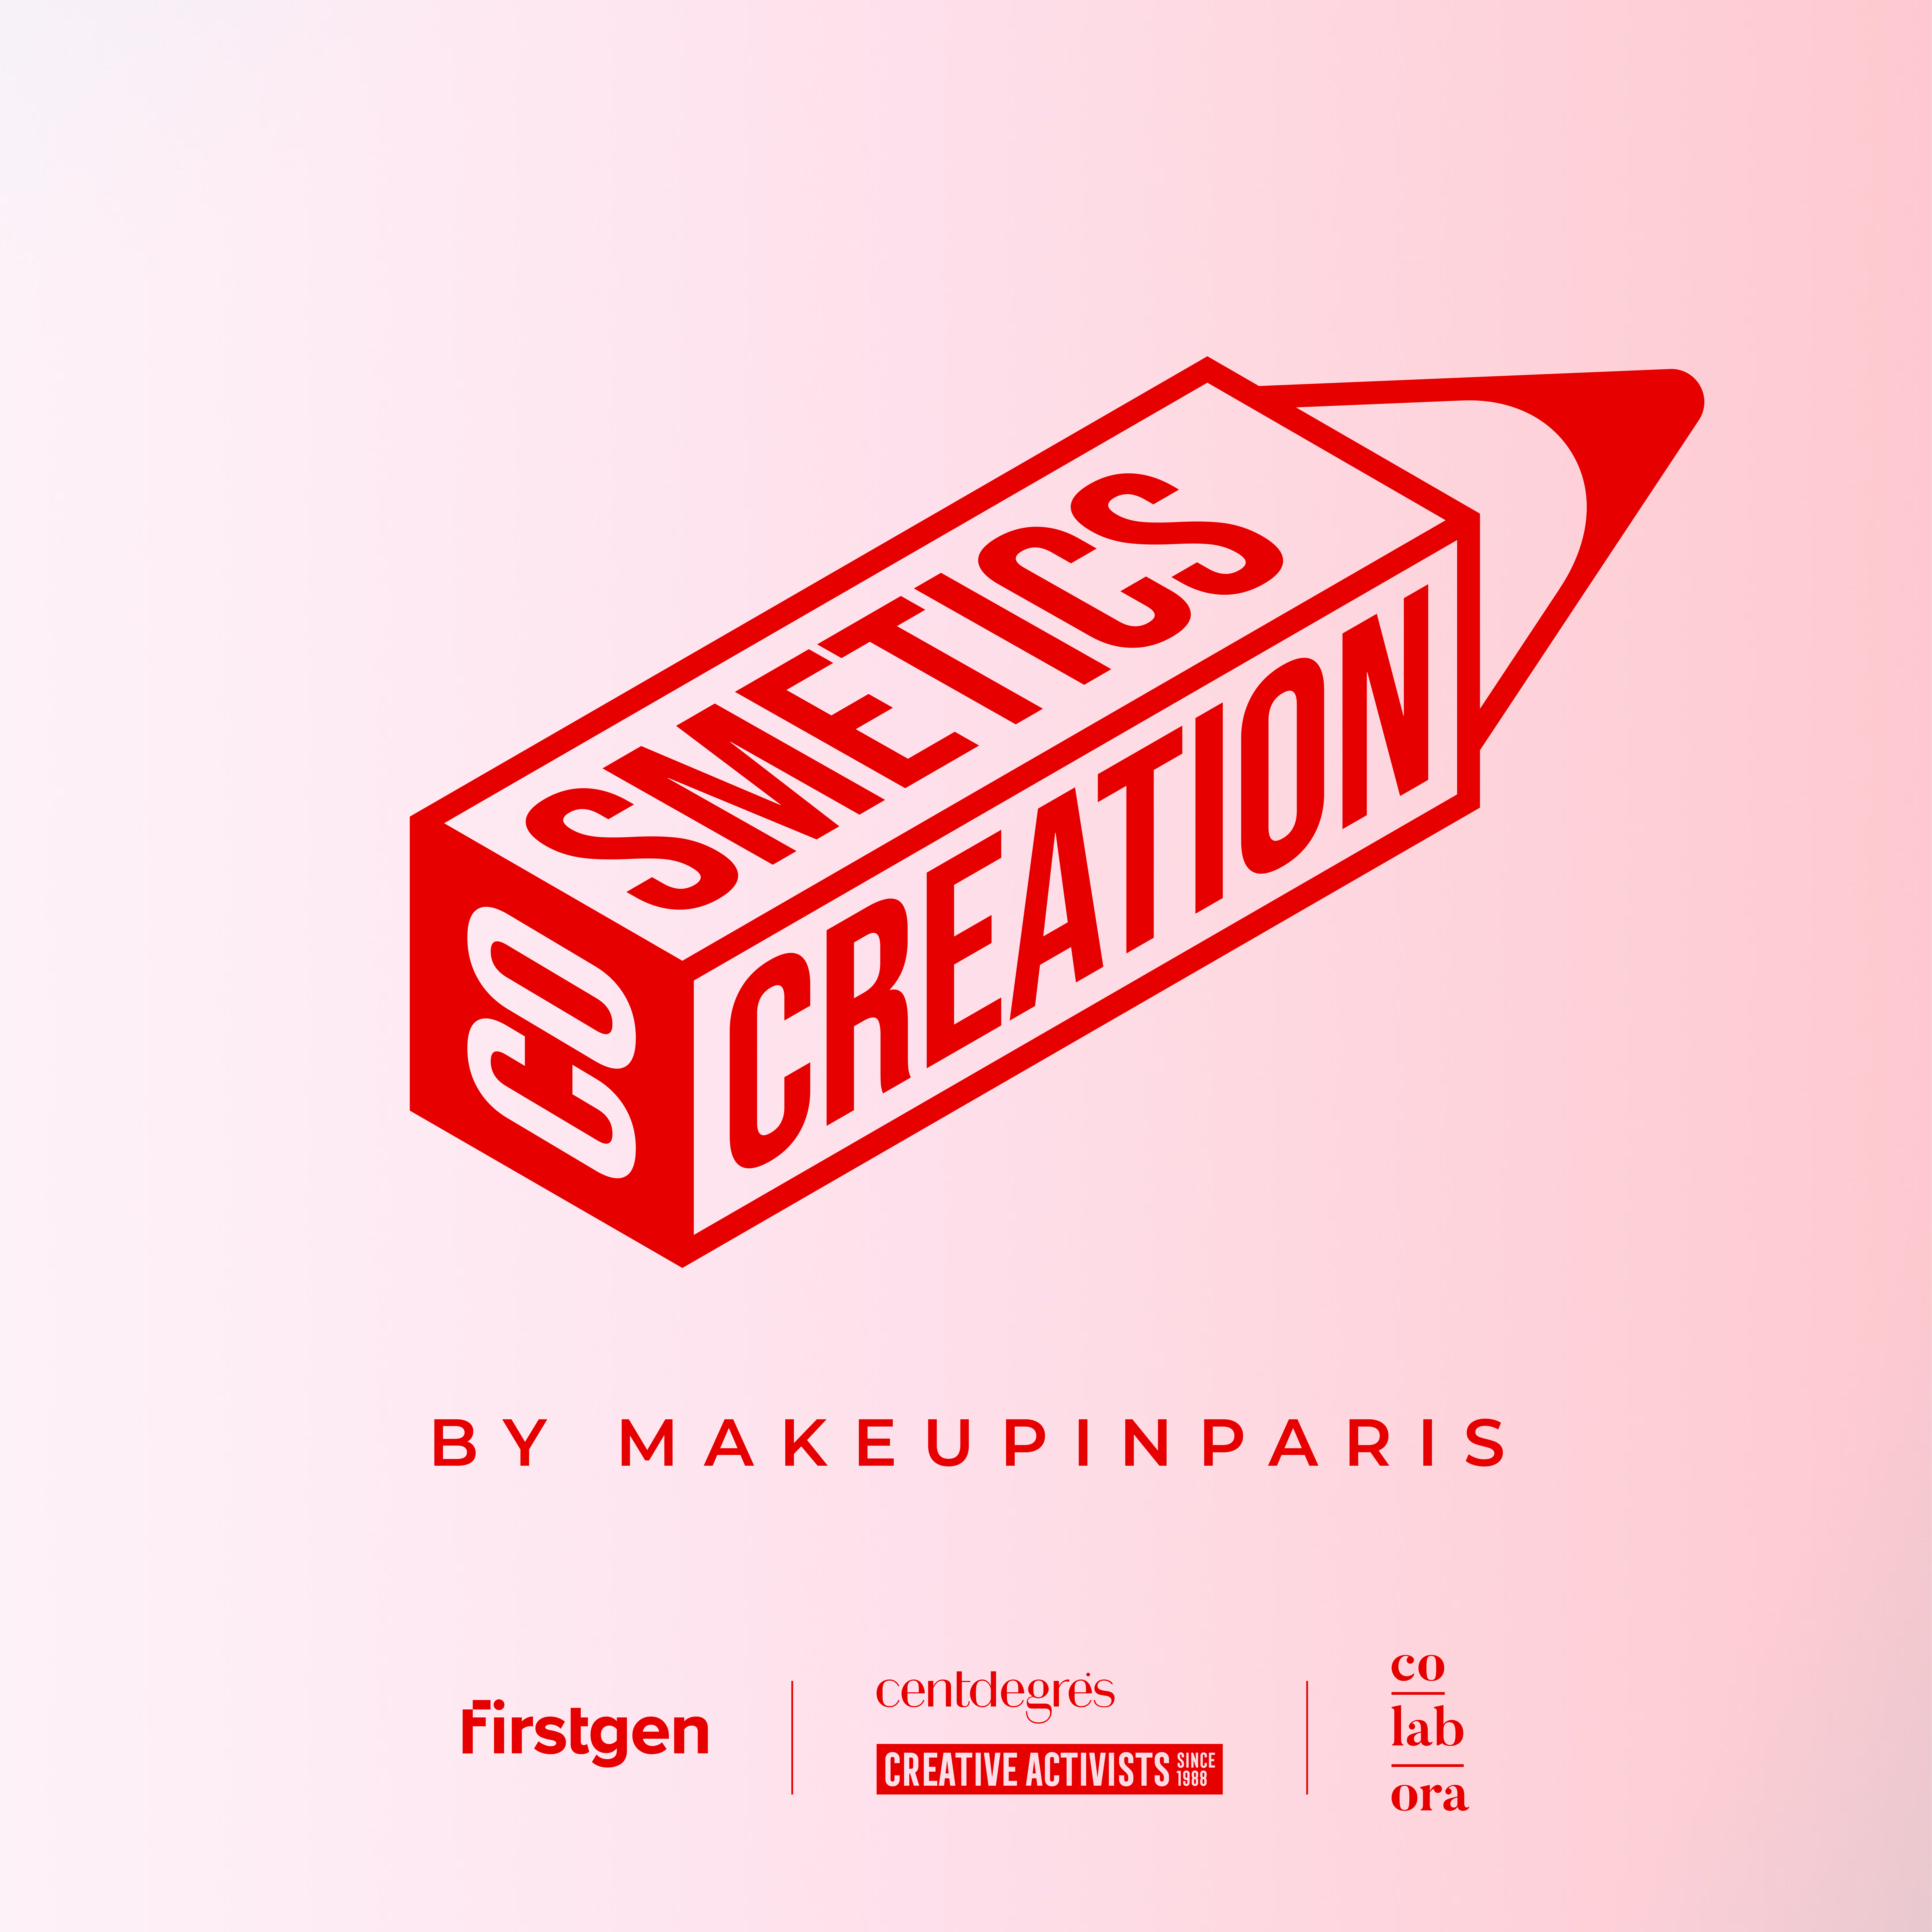 MakeupIn Paris 2021 – Cosmetic Co Creation